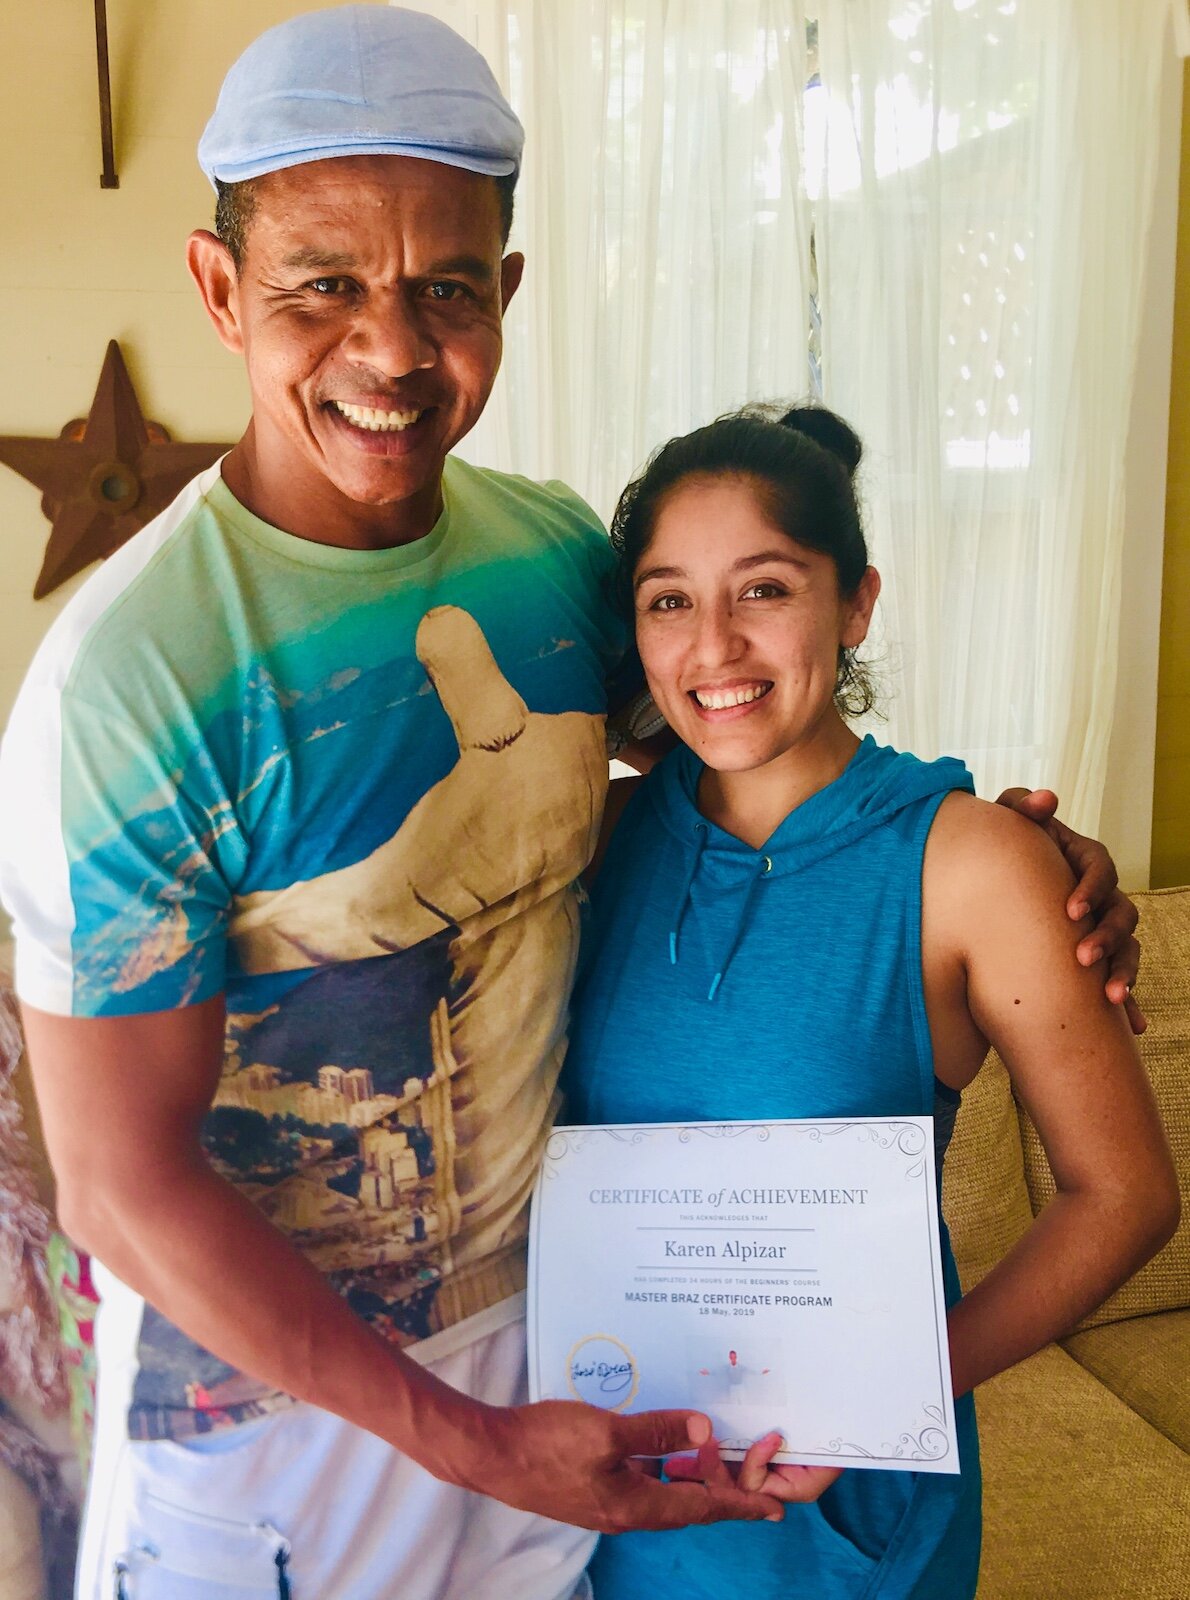 Karen  Alpizar Completes Master Braz Certificate Course 2019